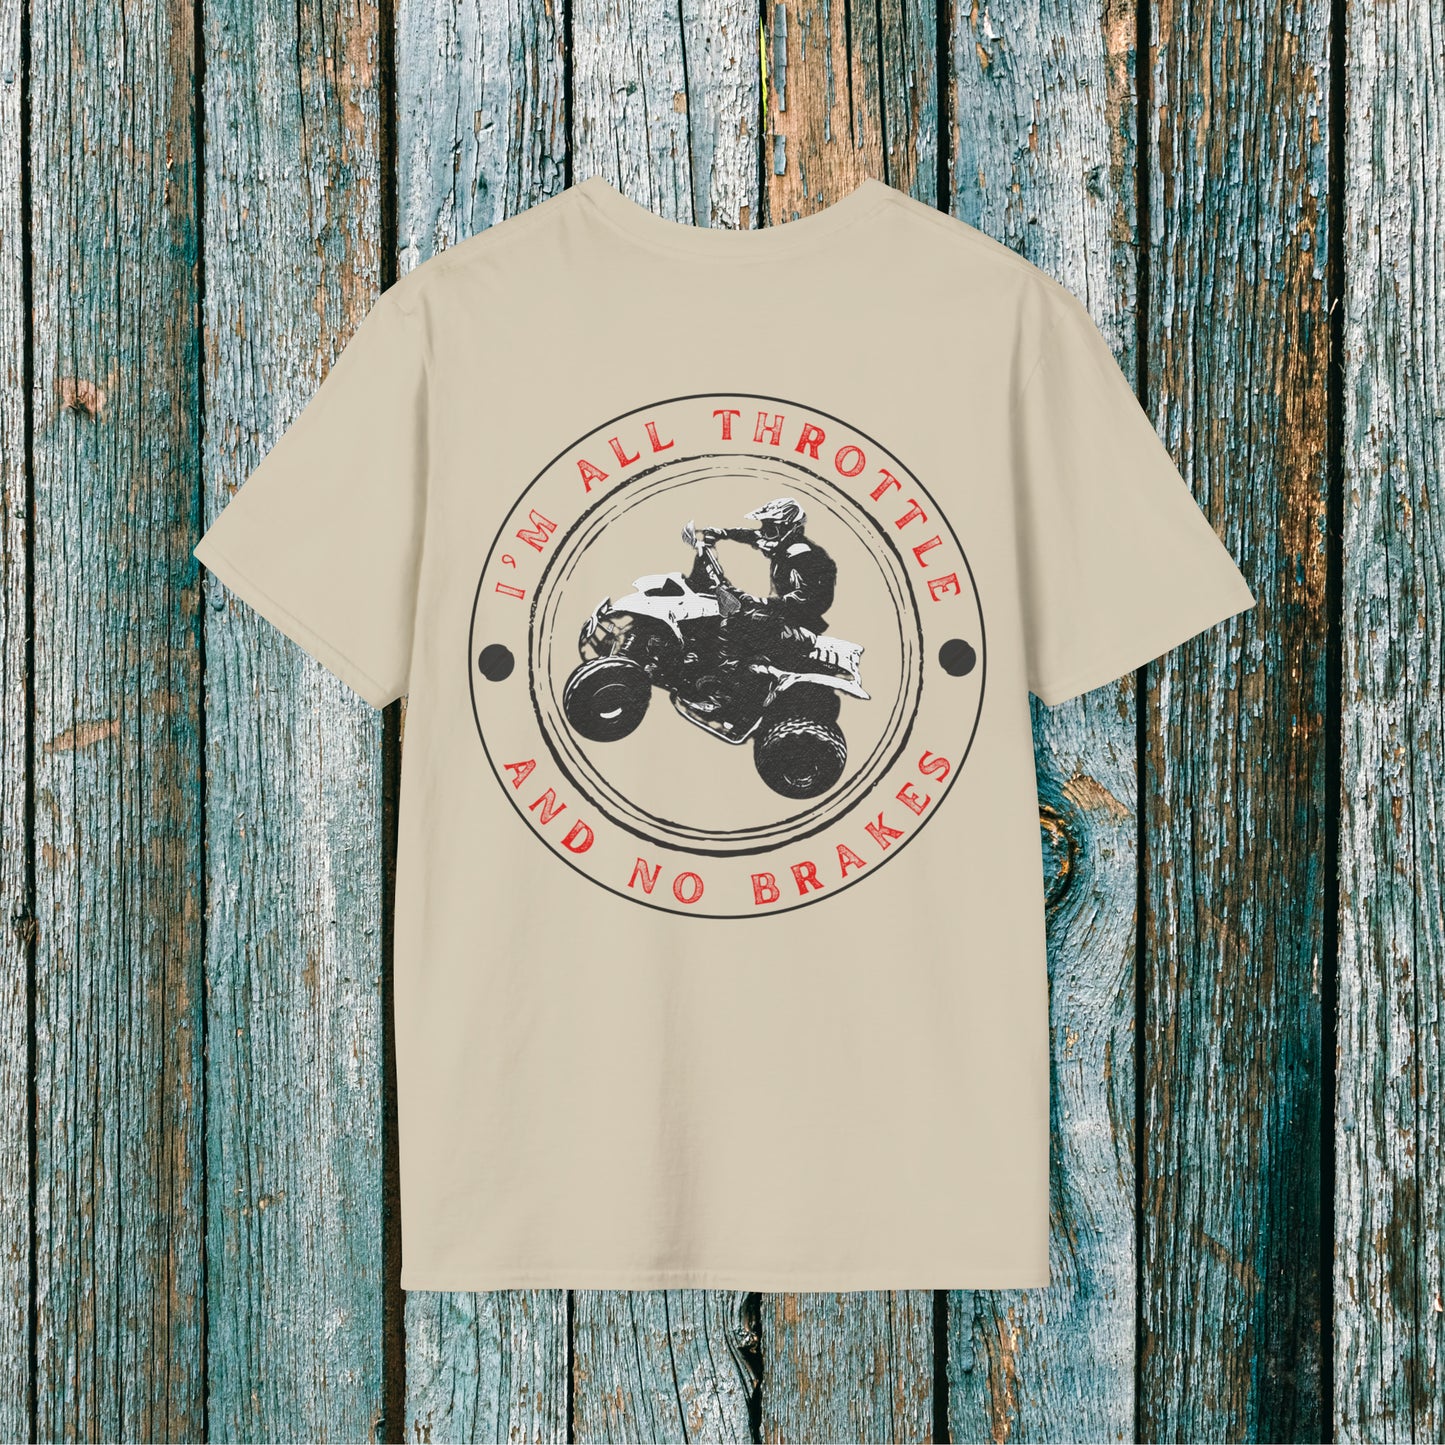 Mens ATV Shirt | All Throttle and No Brakes with Honda 400 EX ATV on back | Four wheeler shirt for men |  SOFT Cotton 2 SIDED Adult Unisex tee shirt | Four wheeler shirt for racers